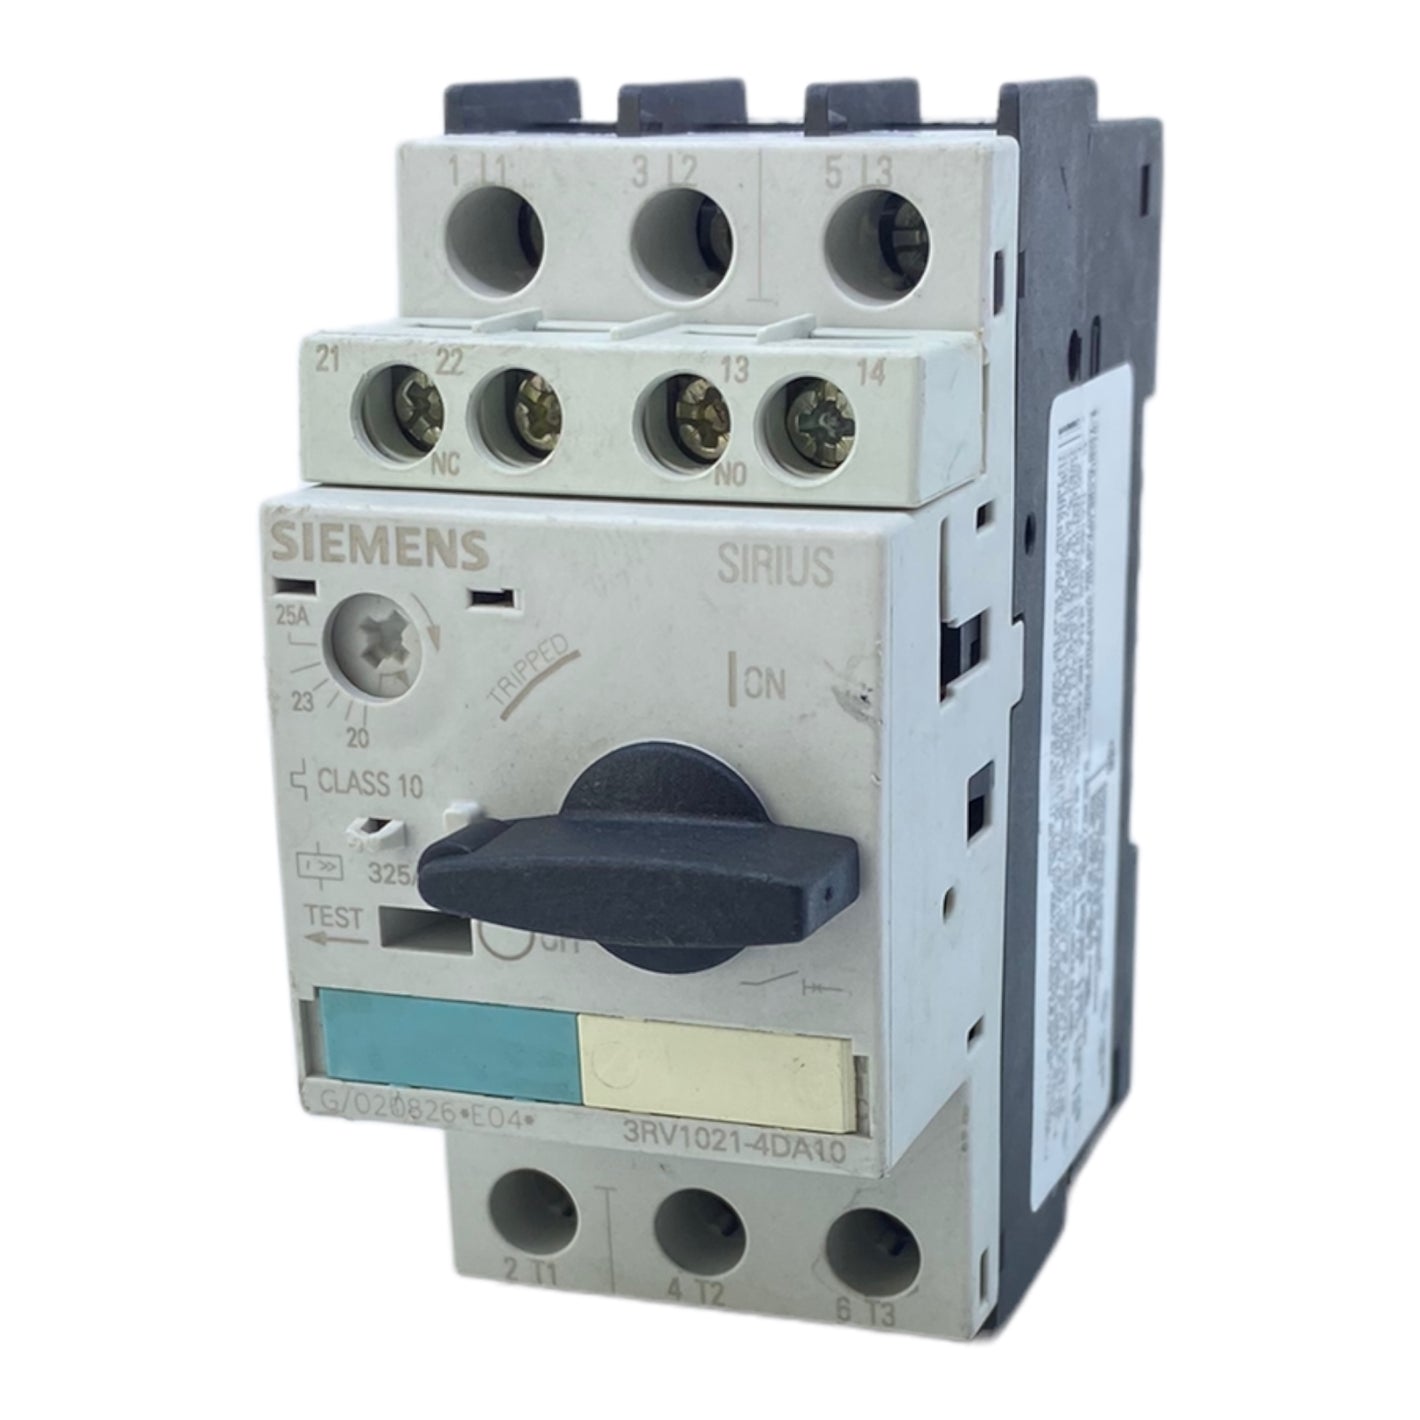 Siemens 3RV1021-4DA10 motor protection switch 3-pole 690 V 20-25 A 